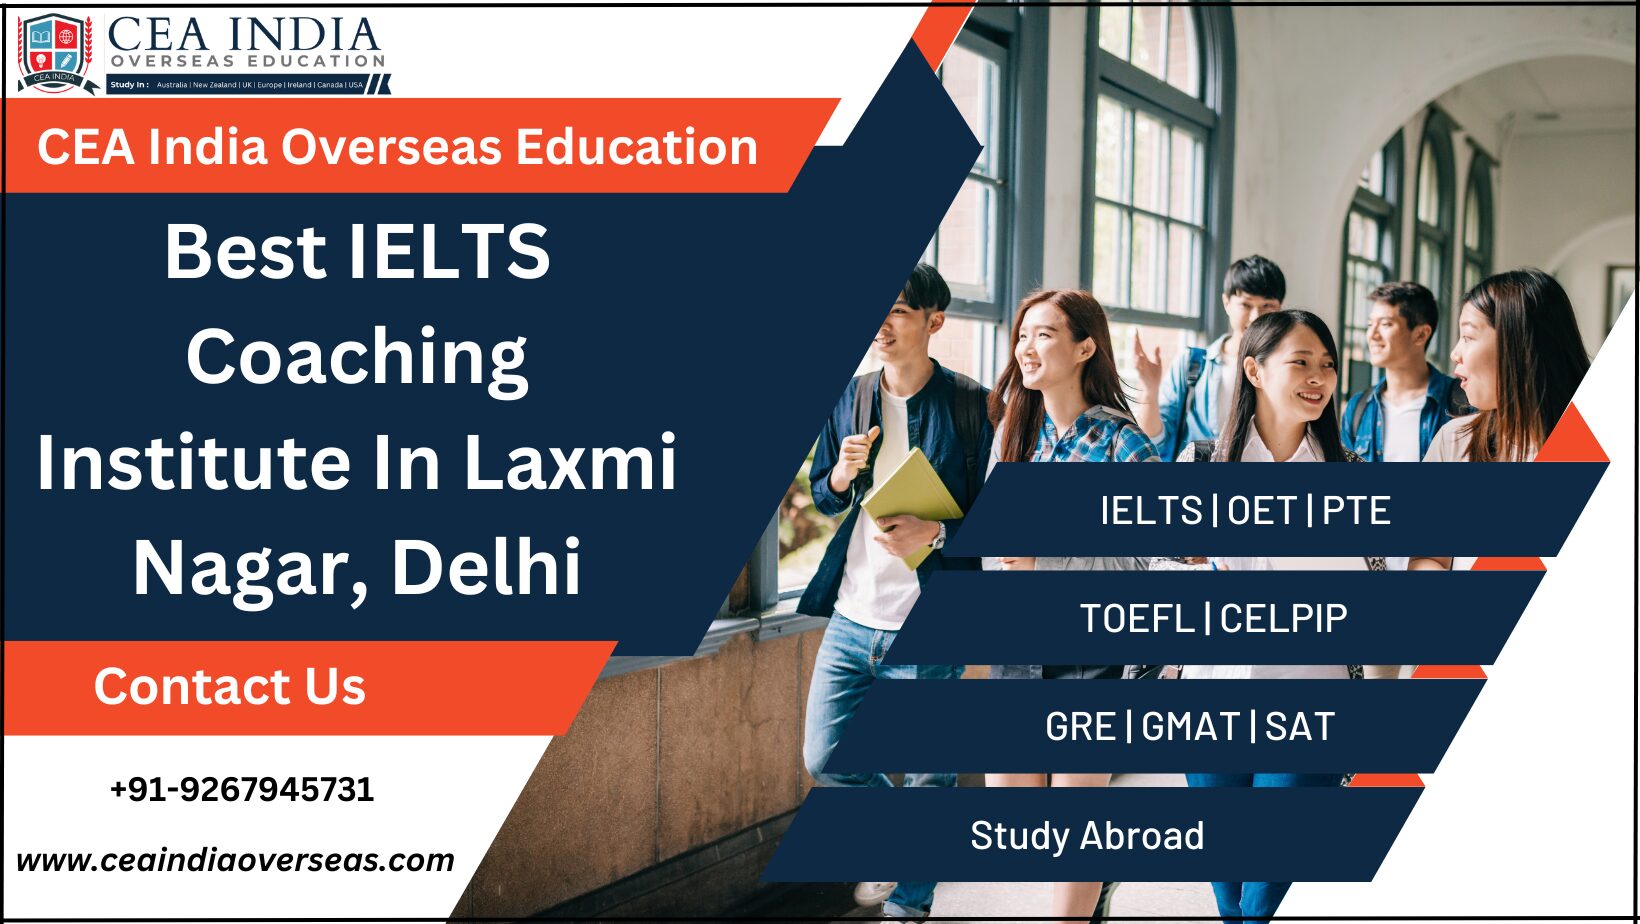 Best IELTS Coaching Institute in Laxmi Nagar, Delhi